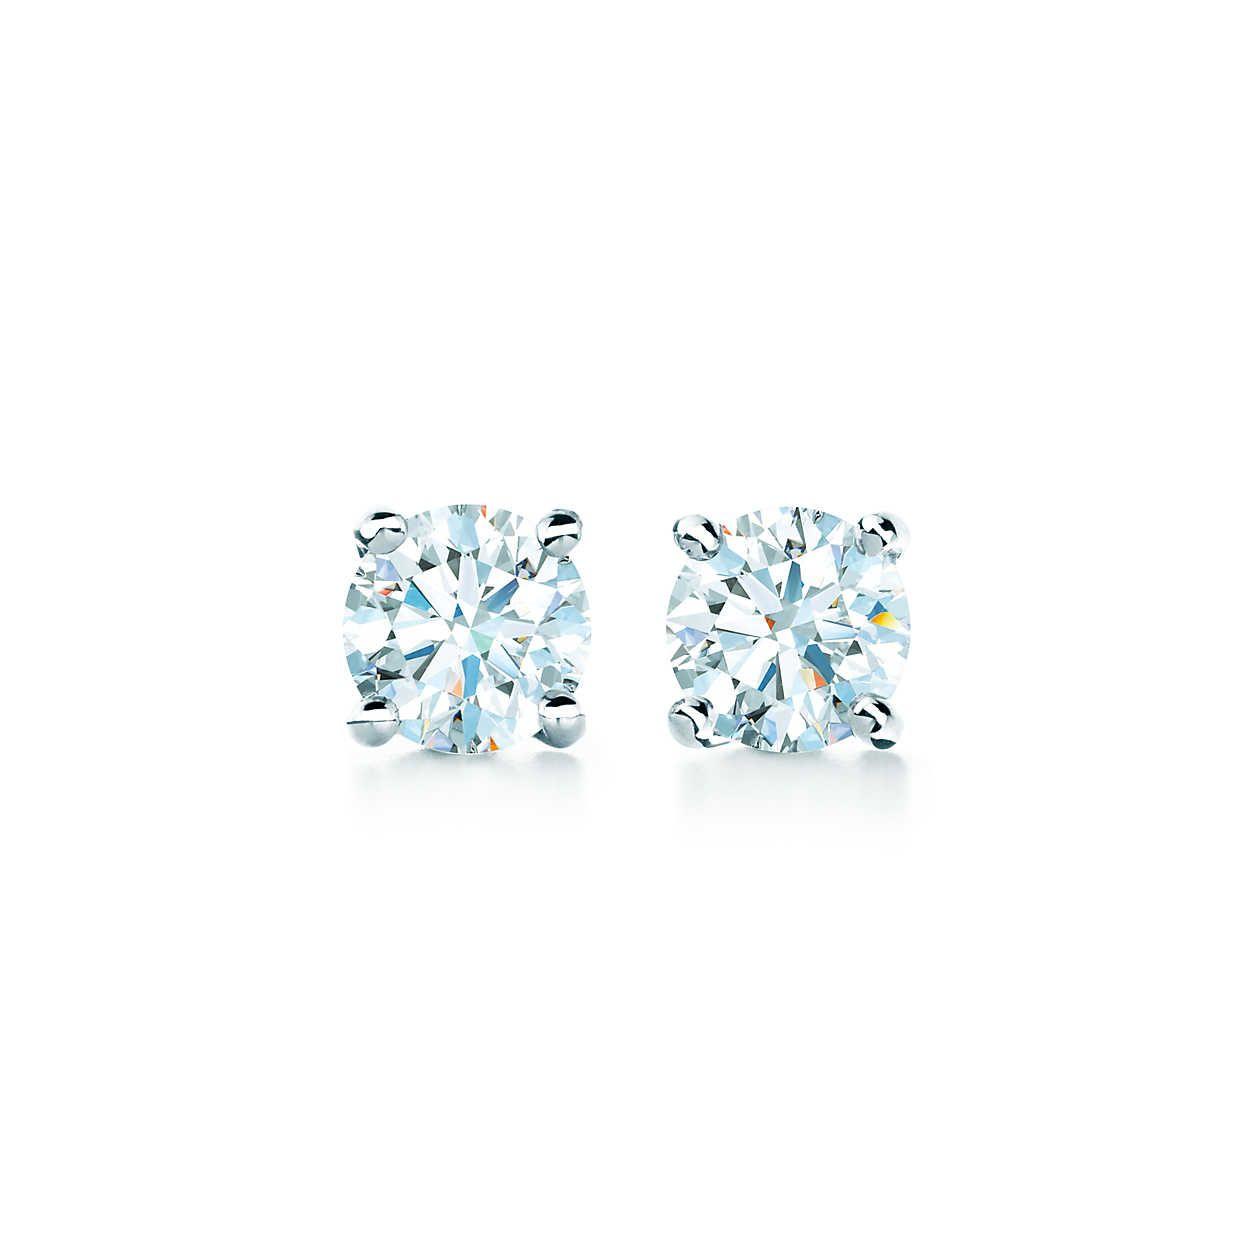 Tiffany Diamonds Logo - Diamond Earrings in Platinum | Tiffany & Co.